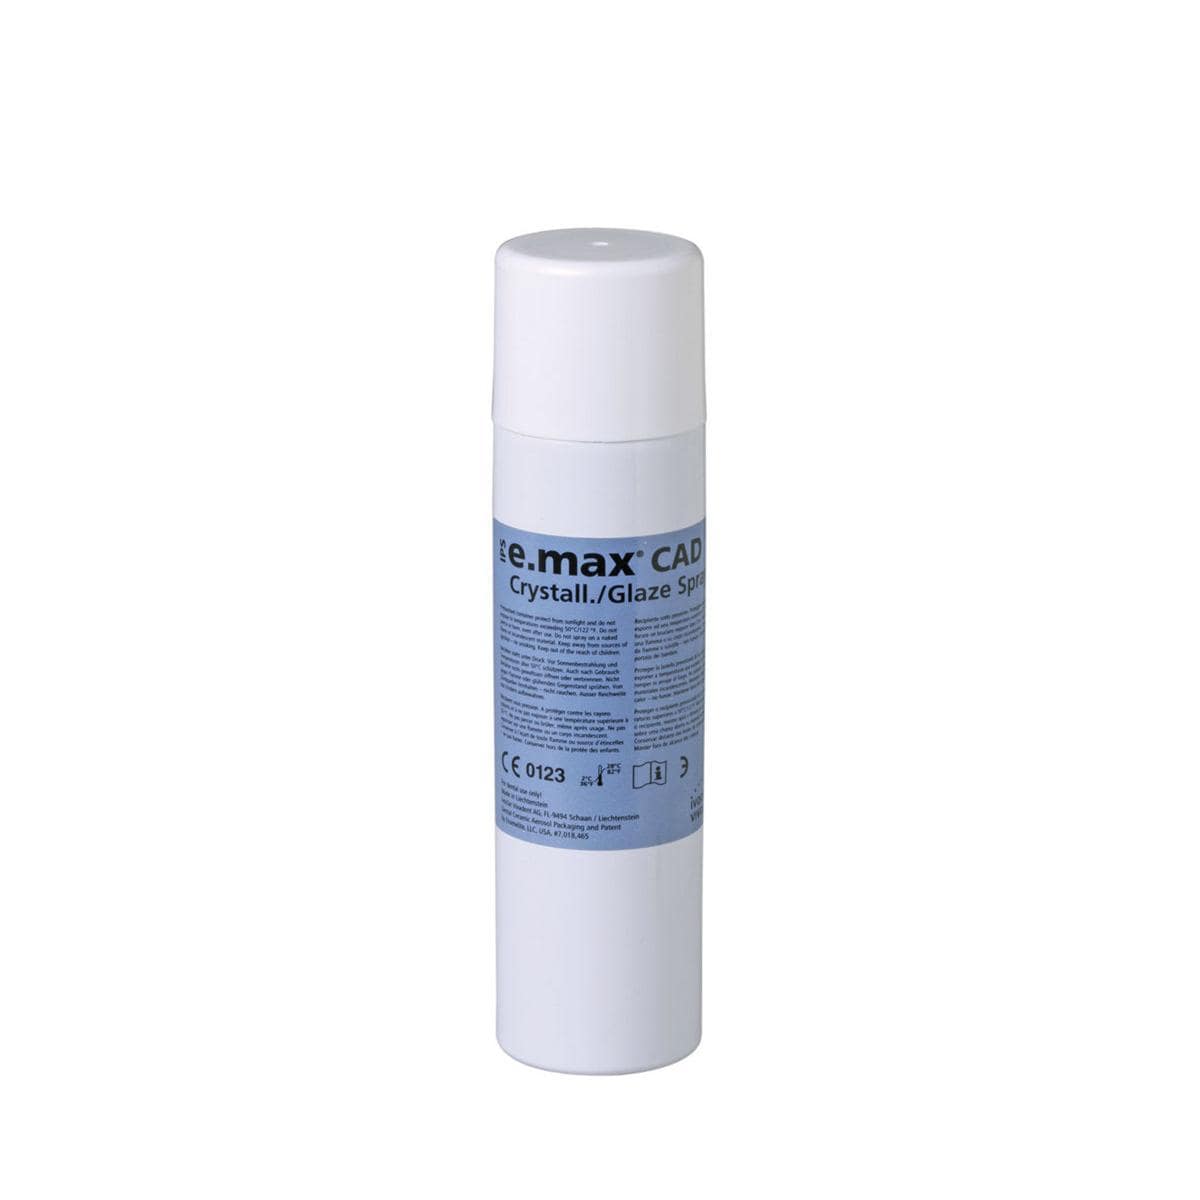 IPS e.max CAD Crystall./Glaze - Spray de glaage, 270 ml